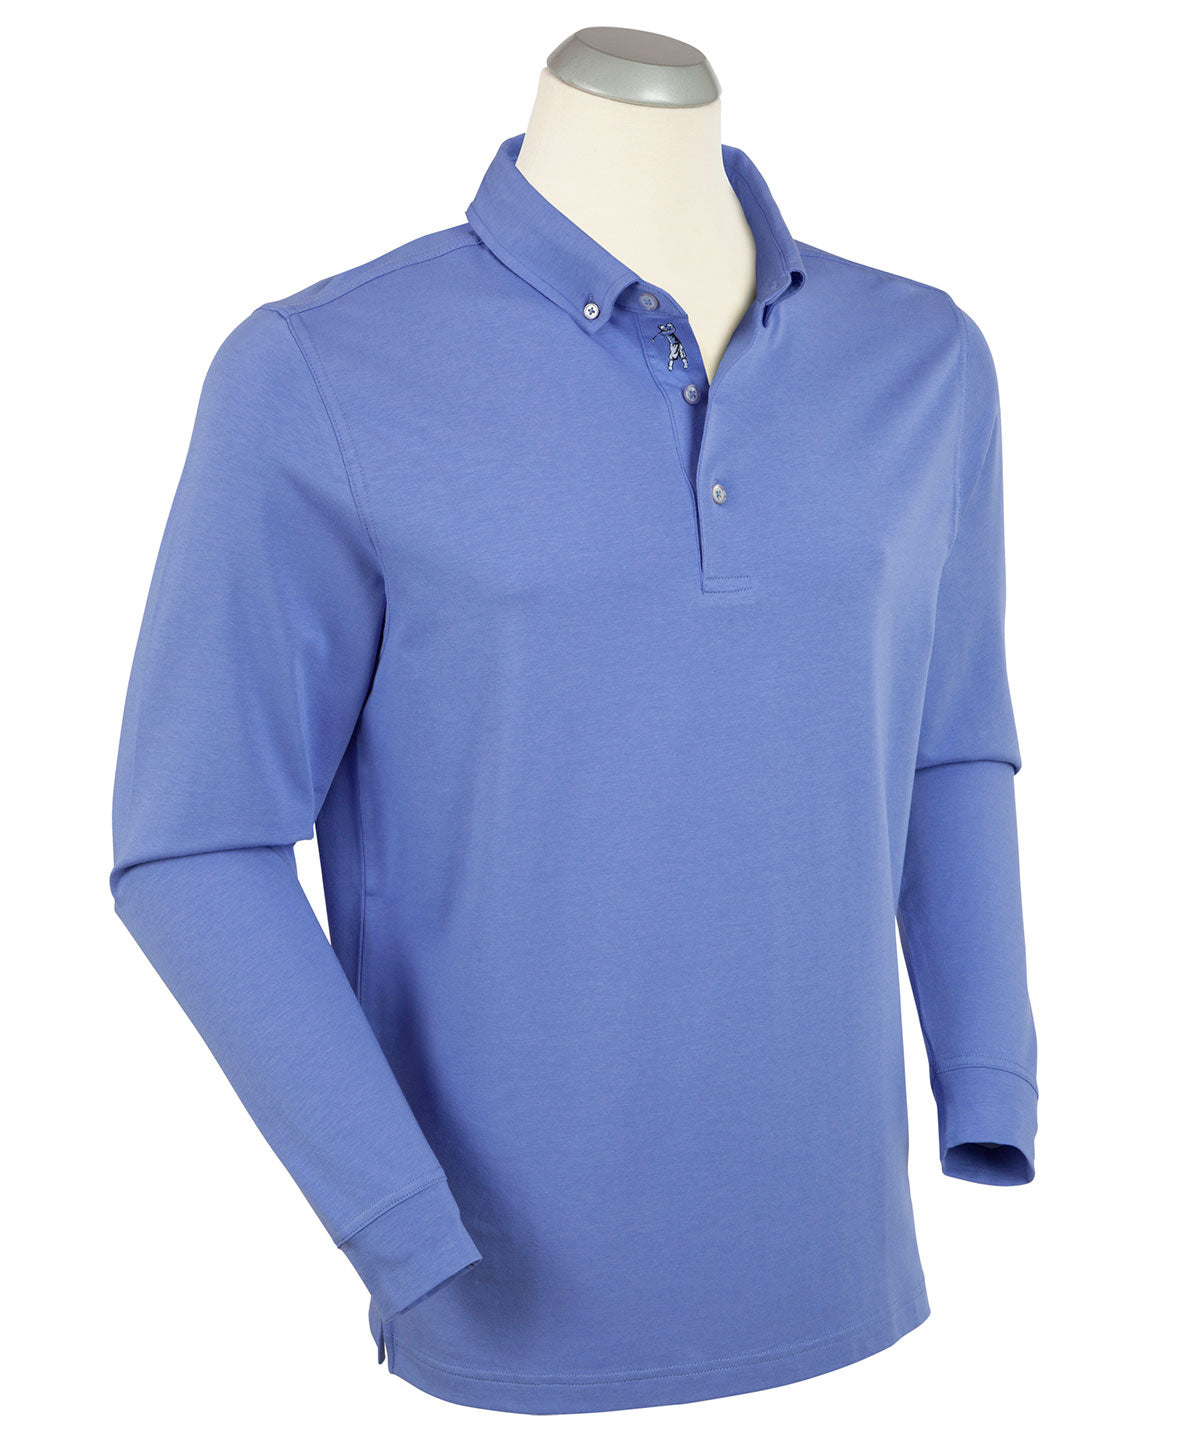 Modal-blend shirt with button-down collar - Navy blue shirts